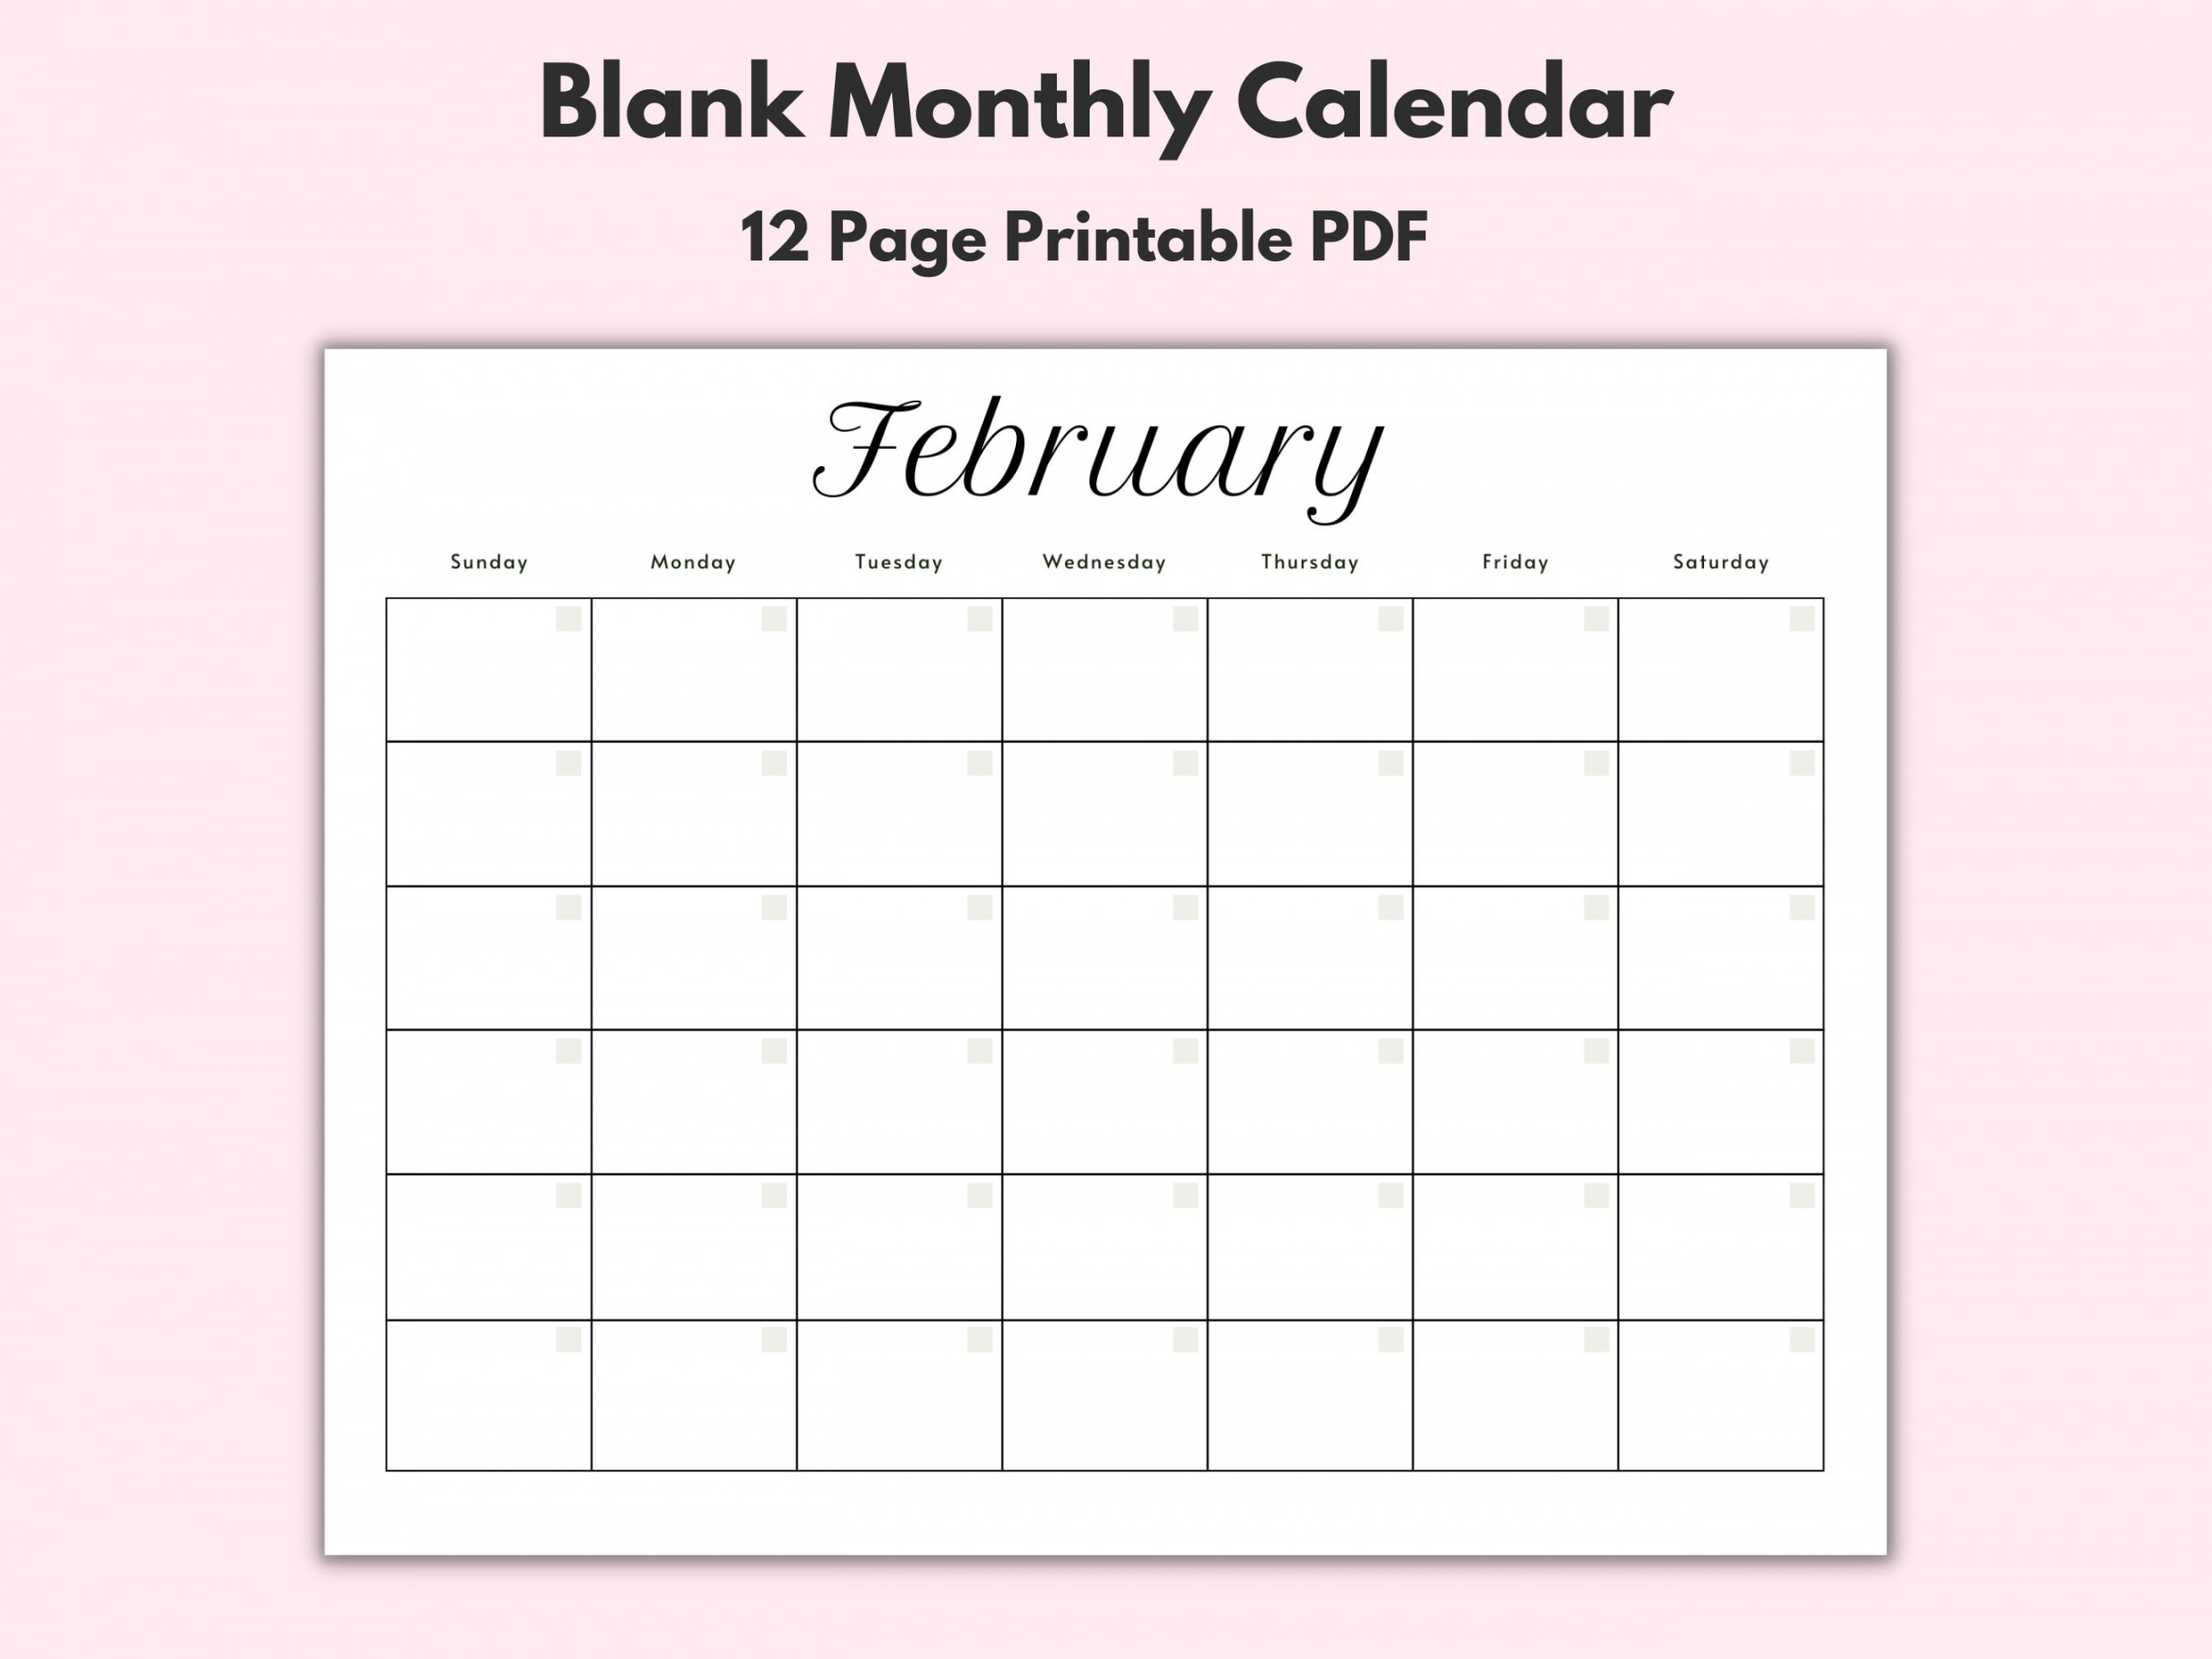 Monthly Blank Calendar Printable Calendar Template - Etsy Norway